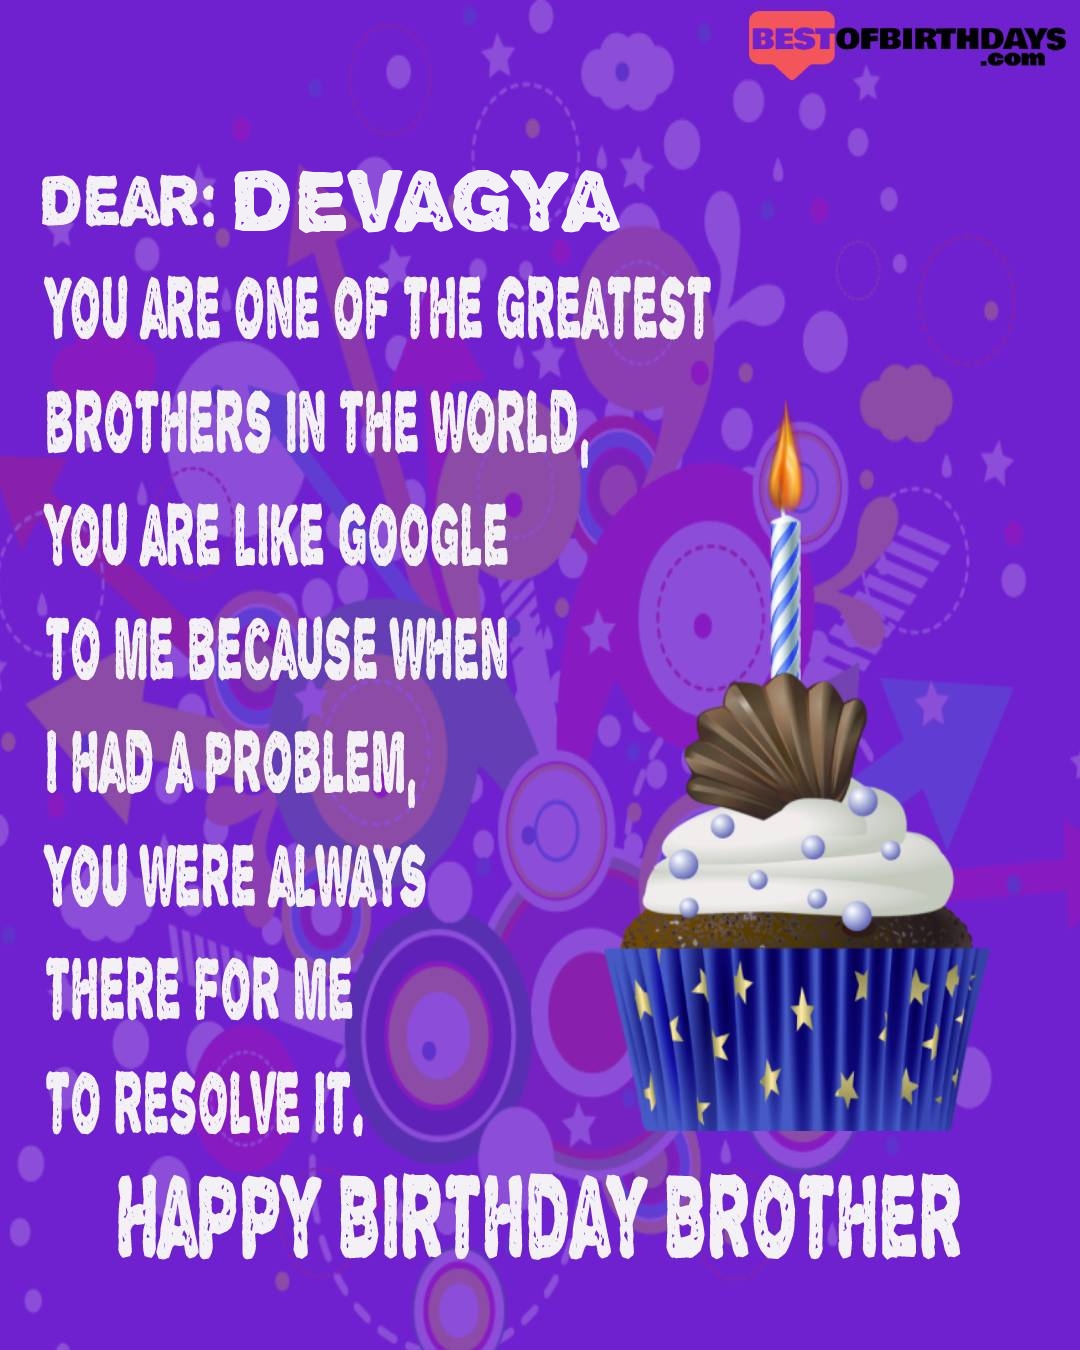 Happy birthday devagya bhai brother bro